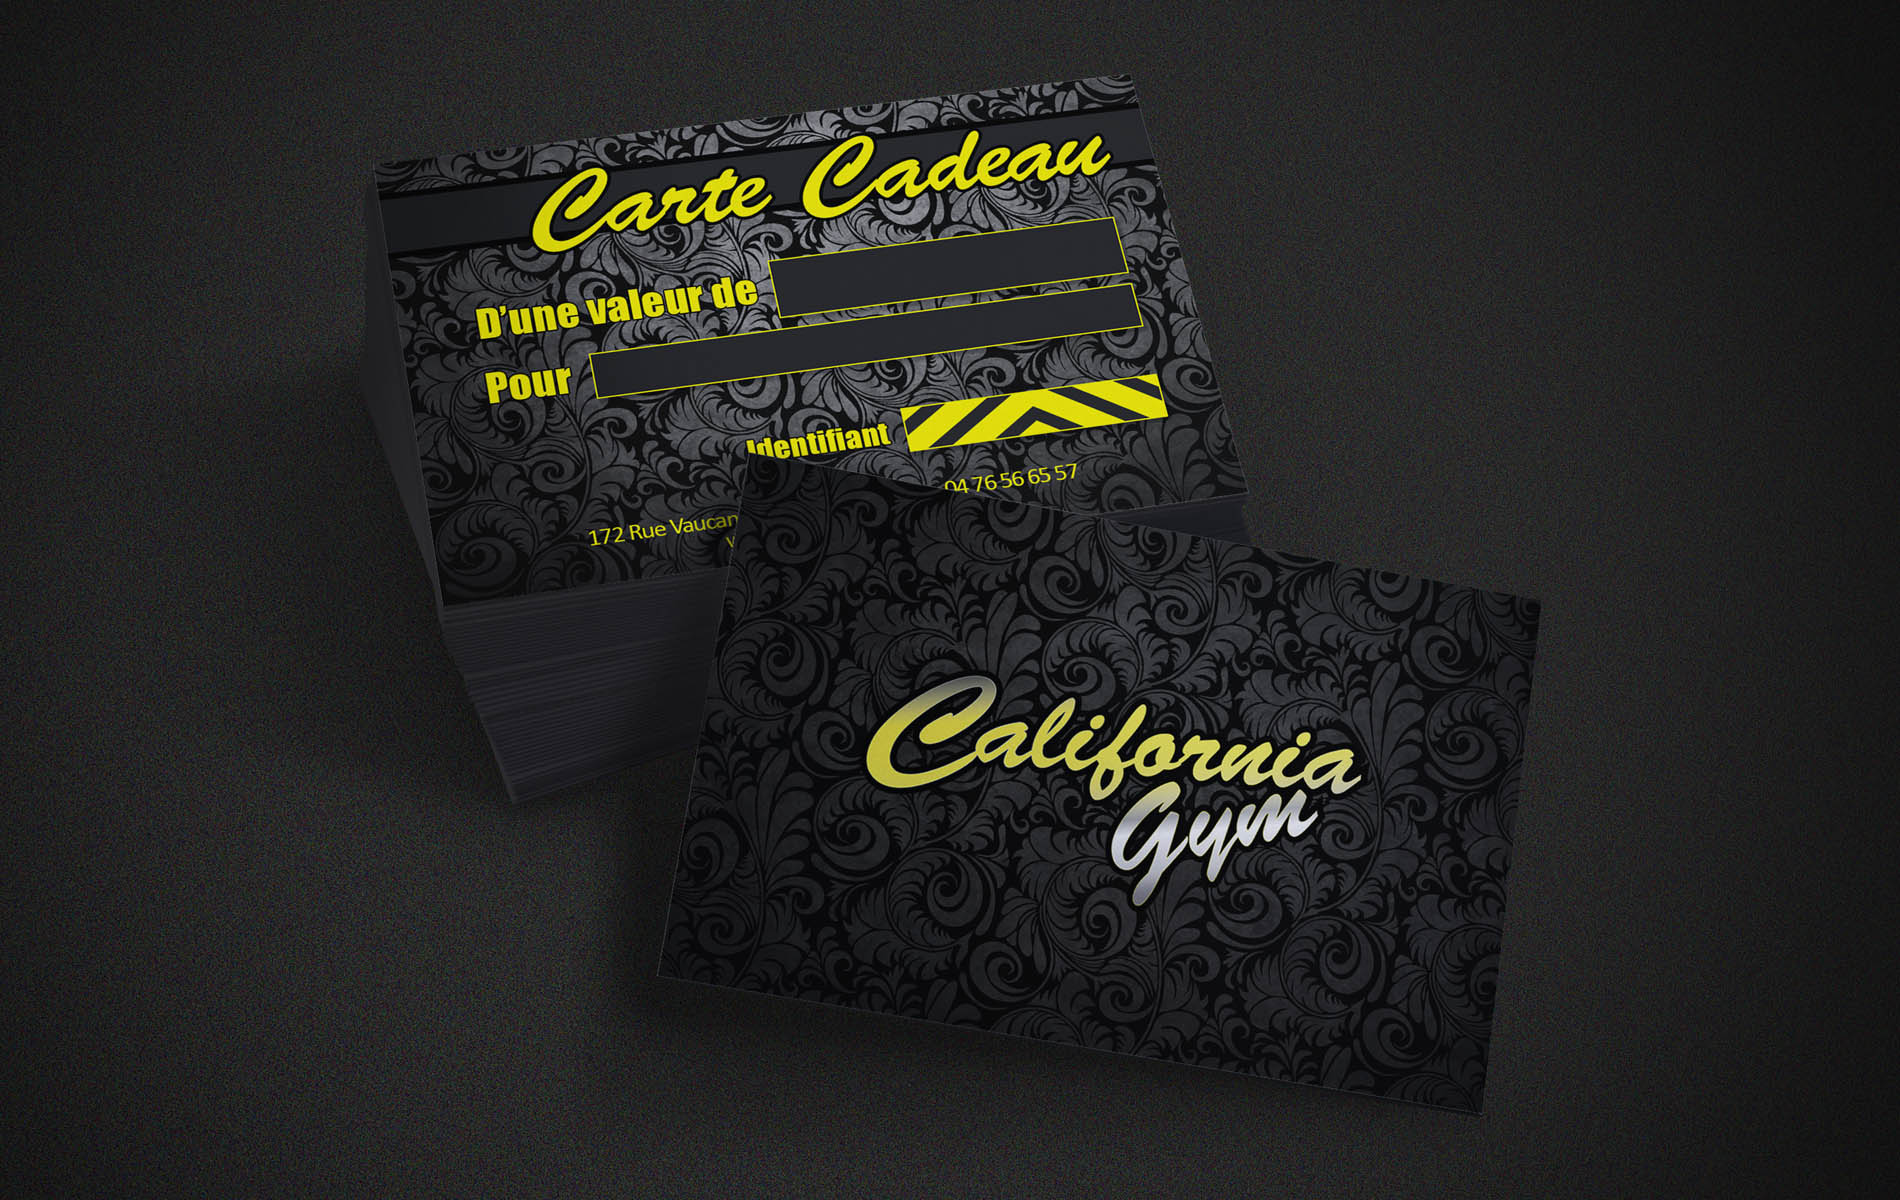 Print : Cartes cadeaux CaliforniaGym